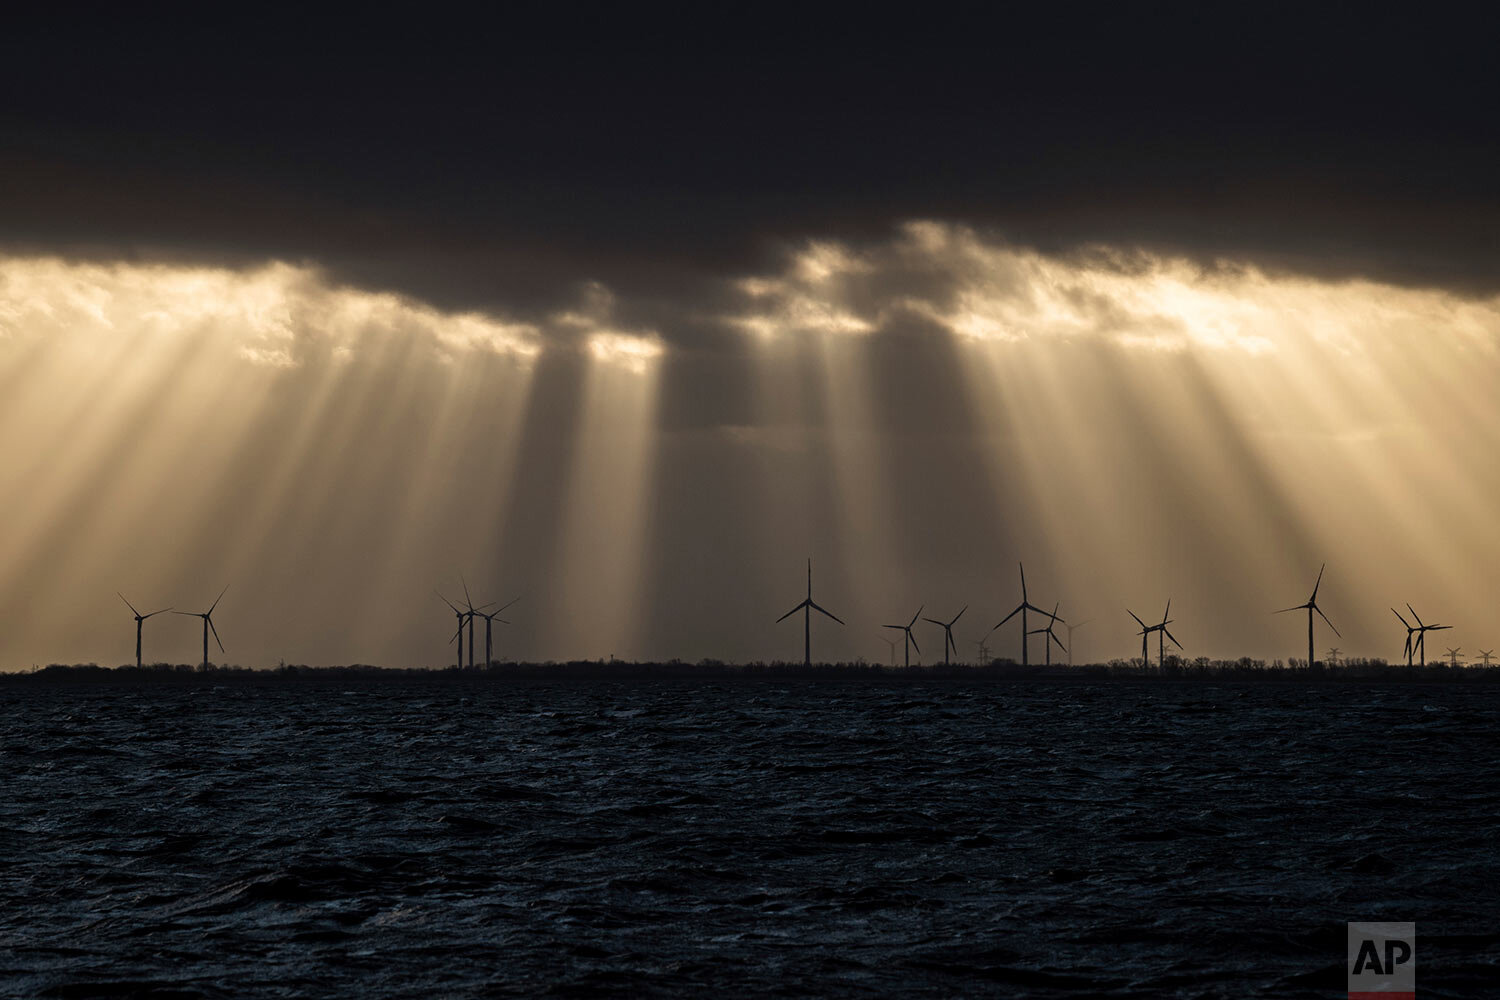  Sunlight breaks through dark clouds shining on a wind farm in Wilhelmshaven, on the North Sea coast of Germany, the evening of Sunday, Dec. 15, 2019. (Mohssen Assanimoghaddam/dpa via AP) 